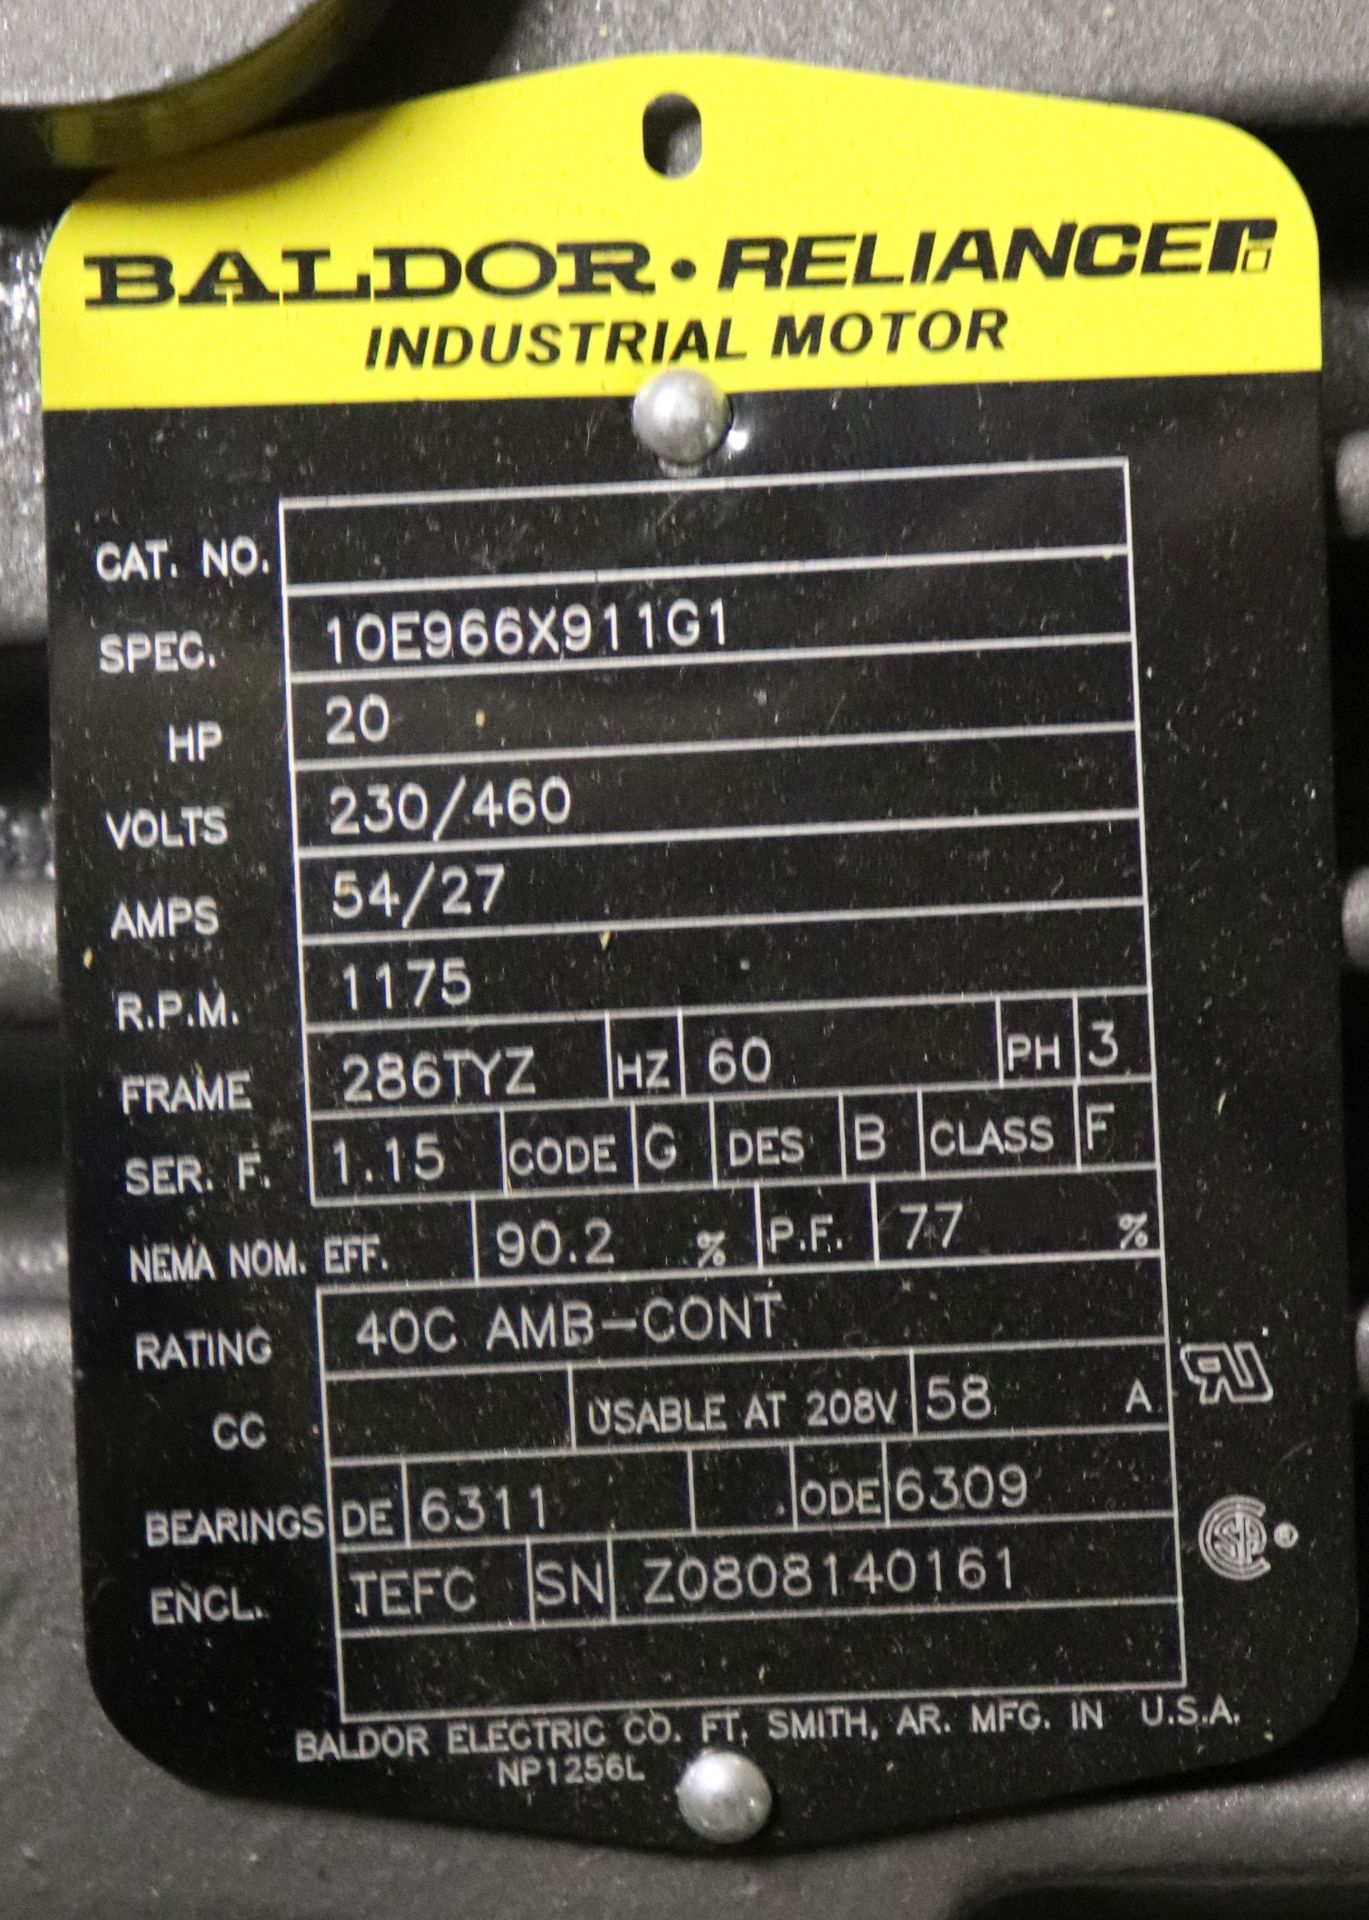 Baldor industrial motor, 20hp, new, model A889D - Image 3 of 3